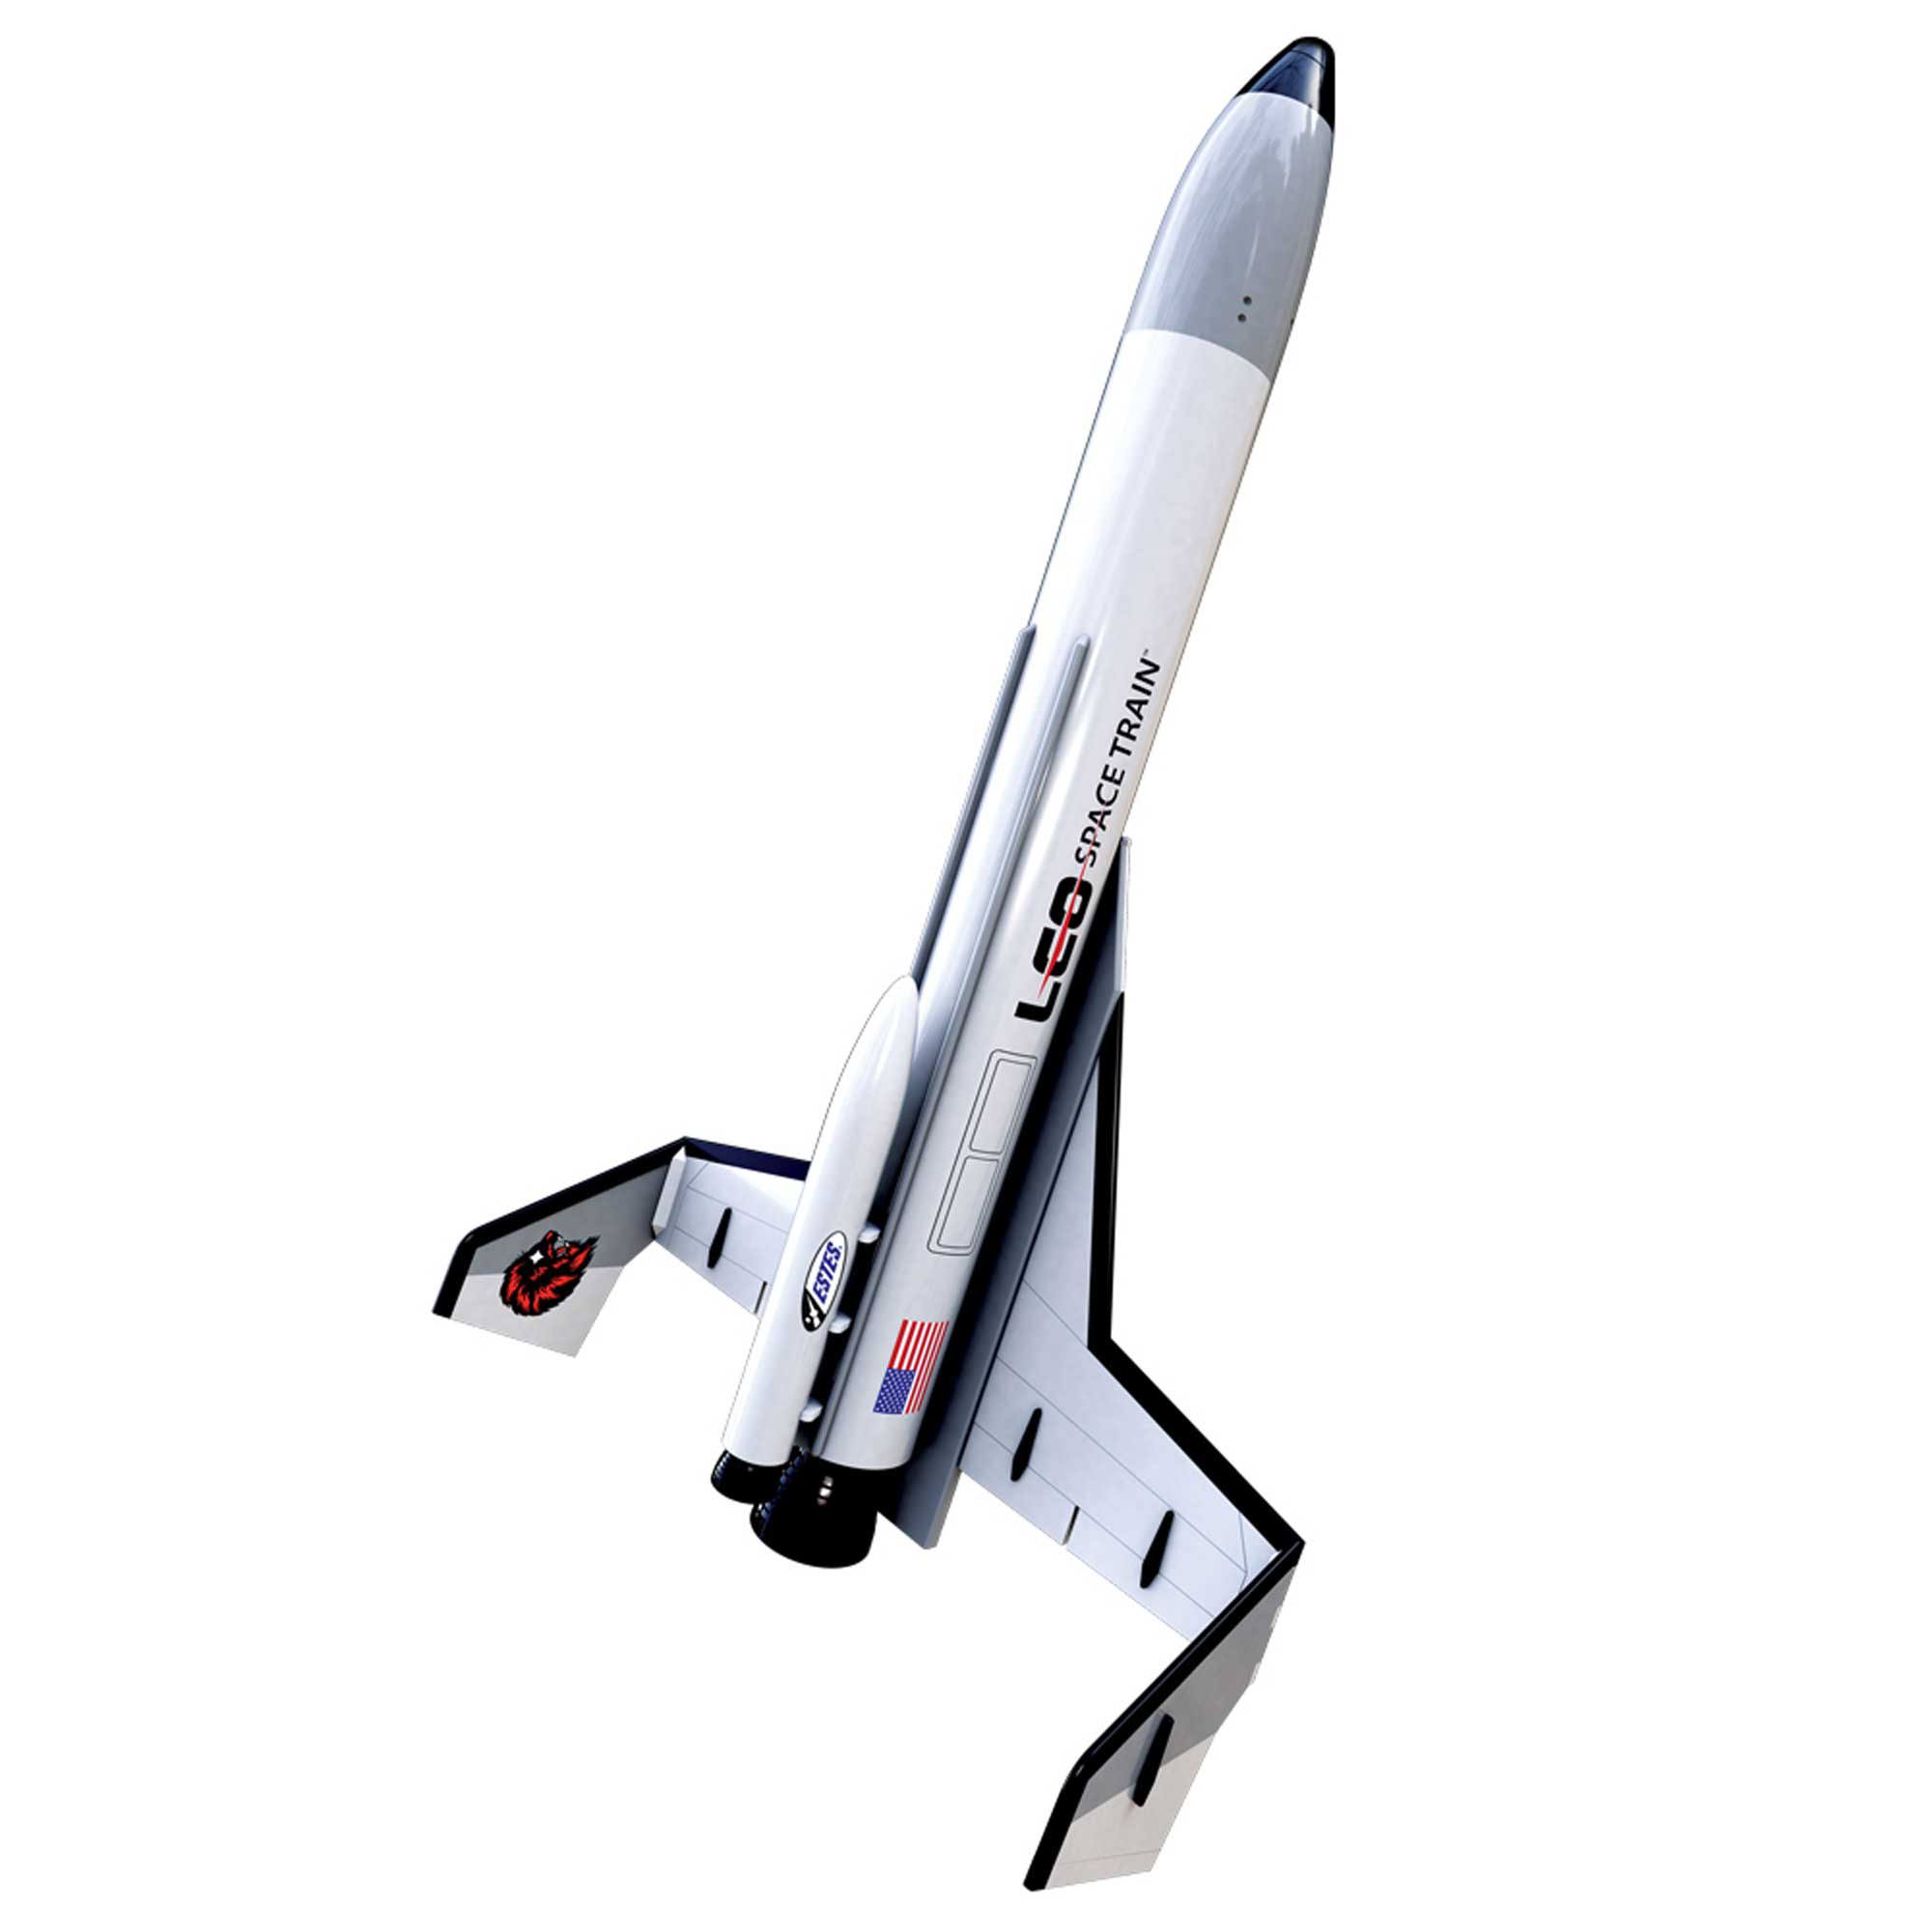 Estes Leo Space Train Flying Model Rocket Kit 7285 | Advanced Level Build, Multi